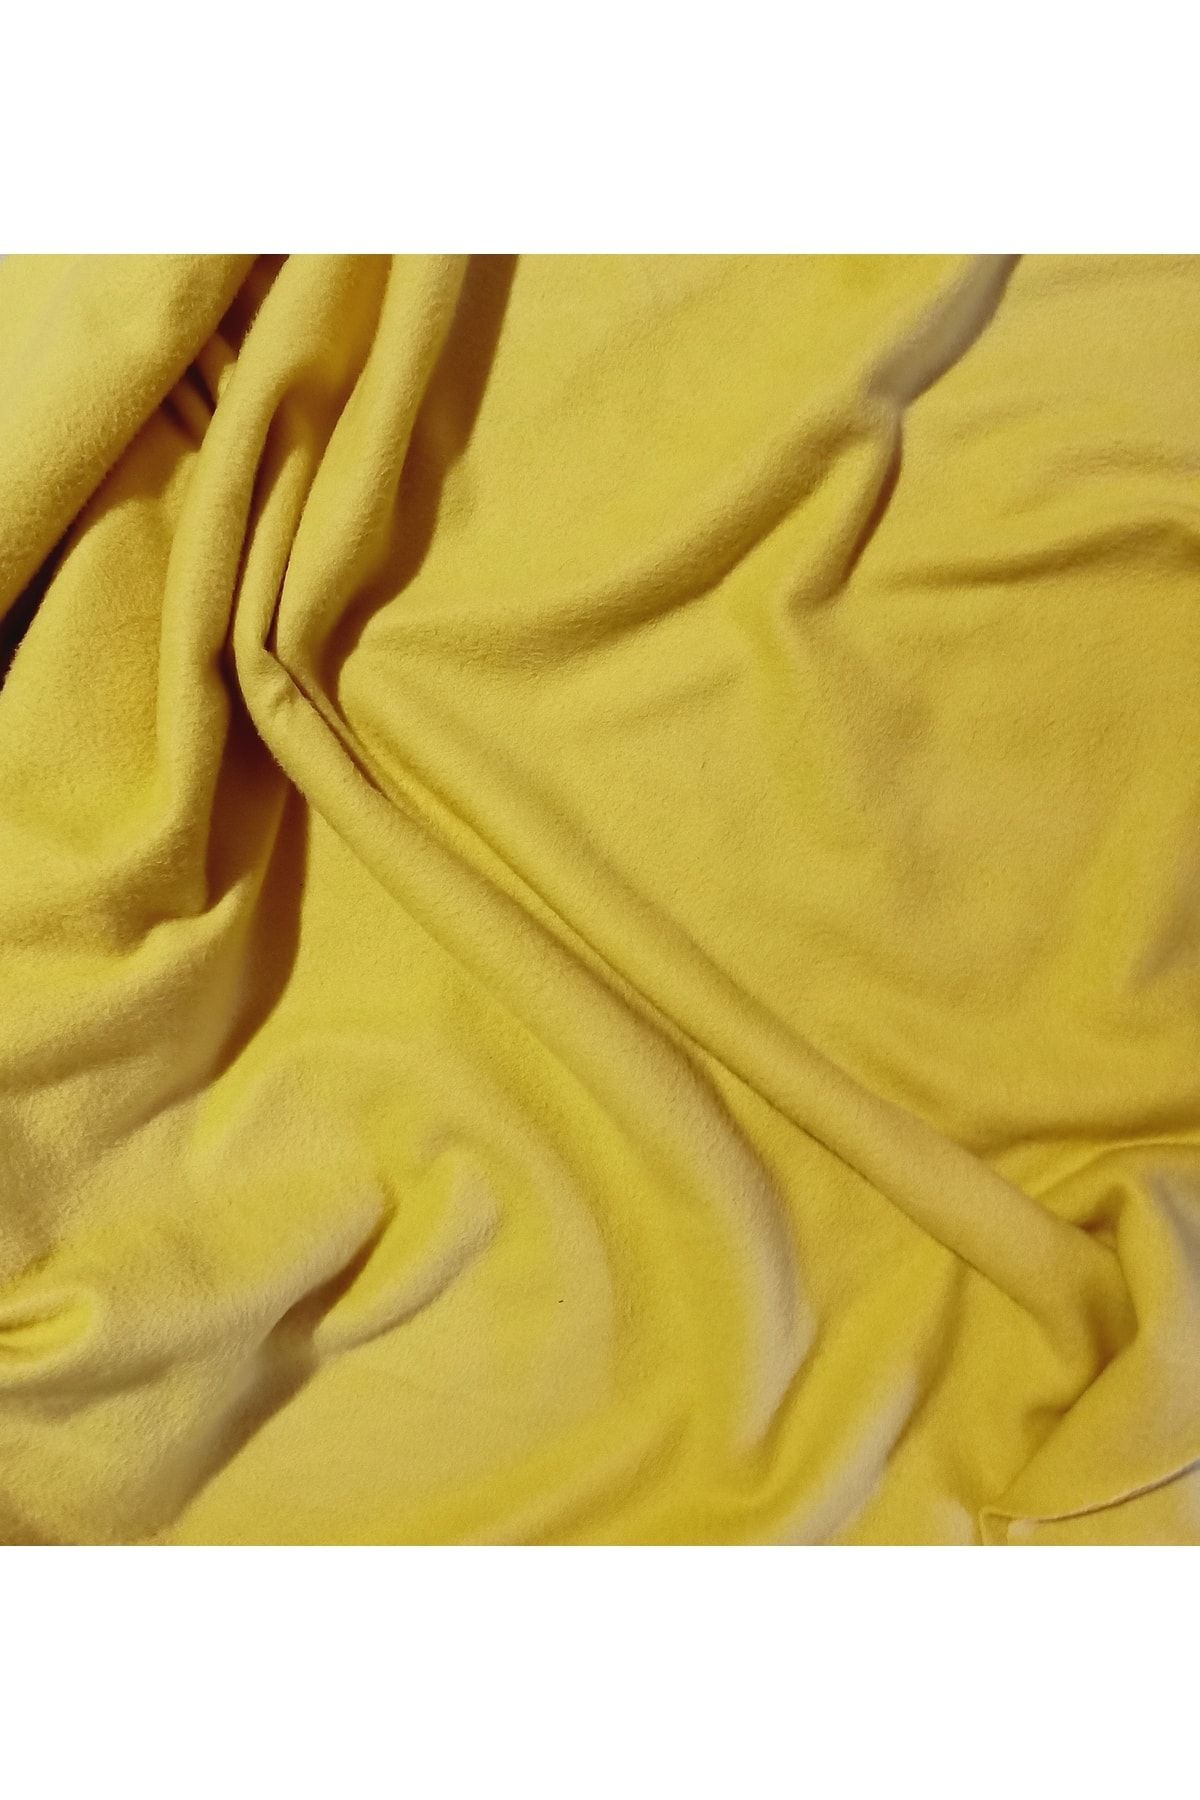 arslan deco Battal Boy Sarı Polar Battaniye Universal Kumaş Örtü Sarı Battaniye 220 Cm * 190 Cm